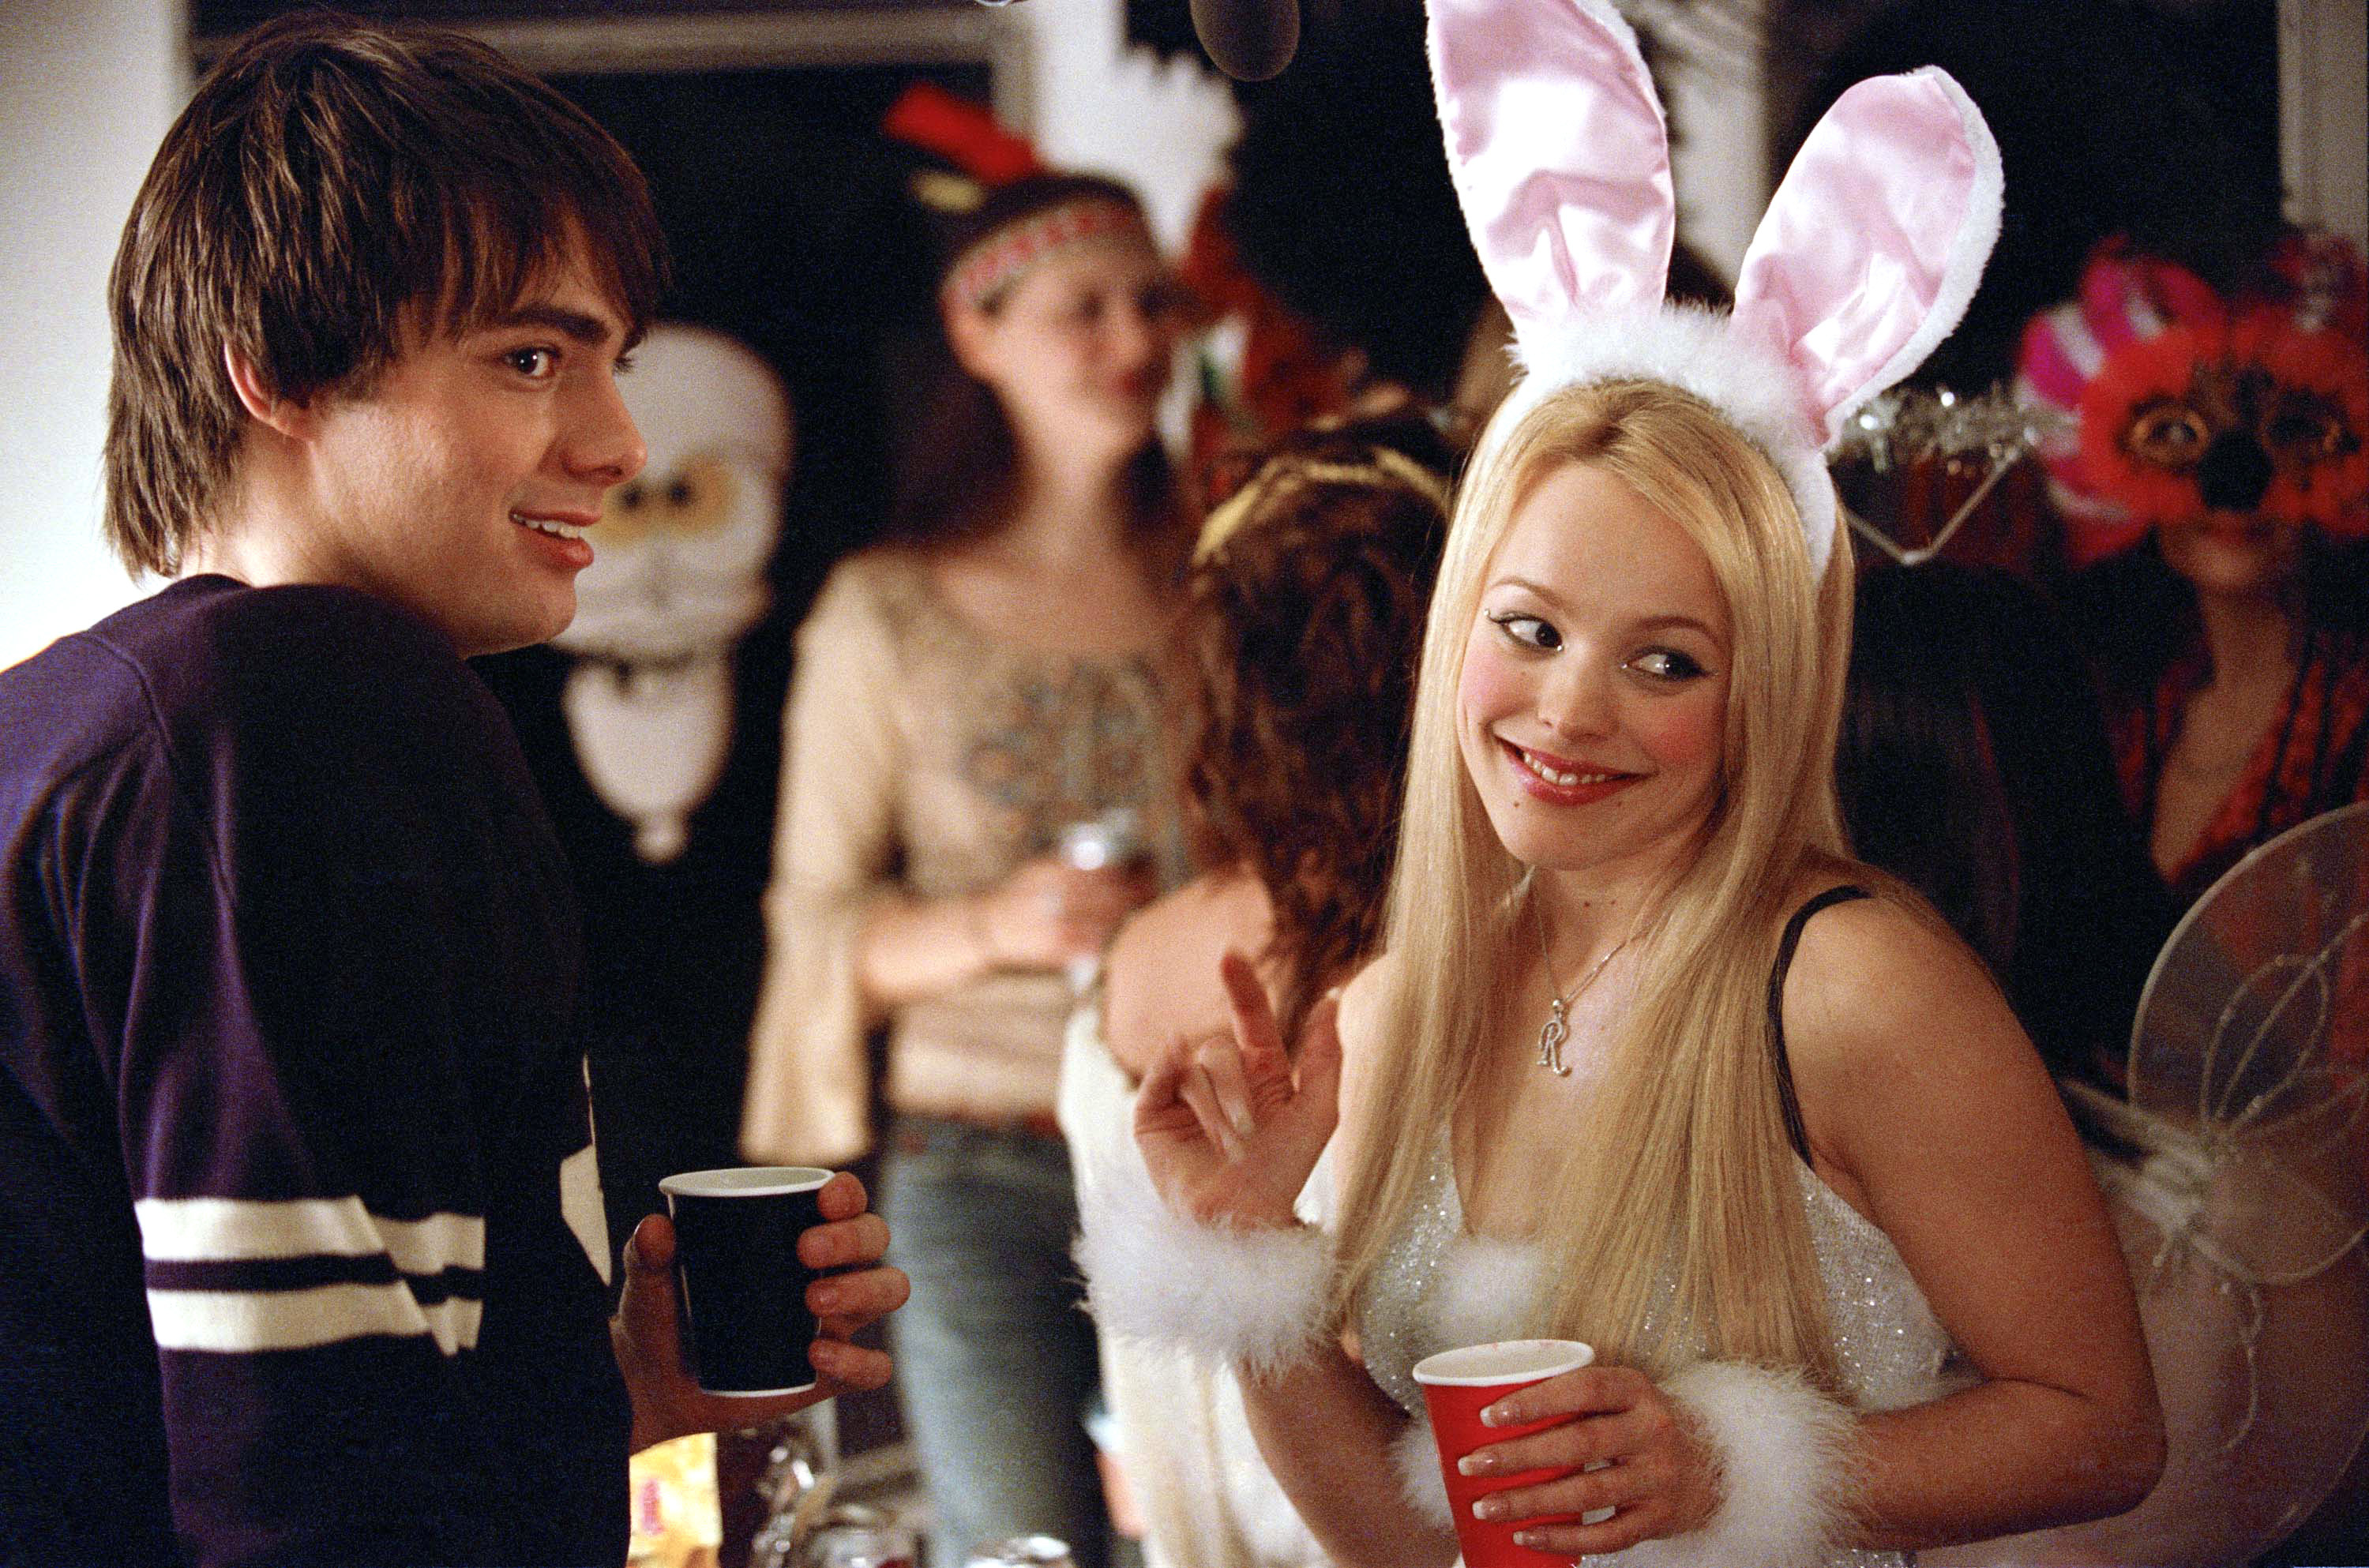 Rachel McAdams dressed as a rabbit talks to Jonathan Bennett at a party